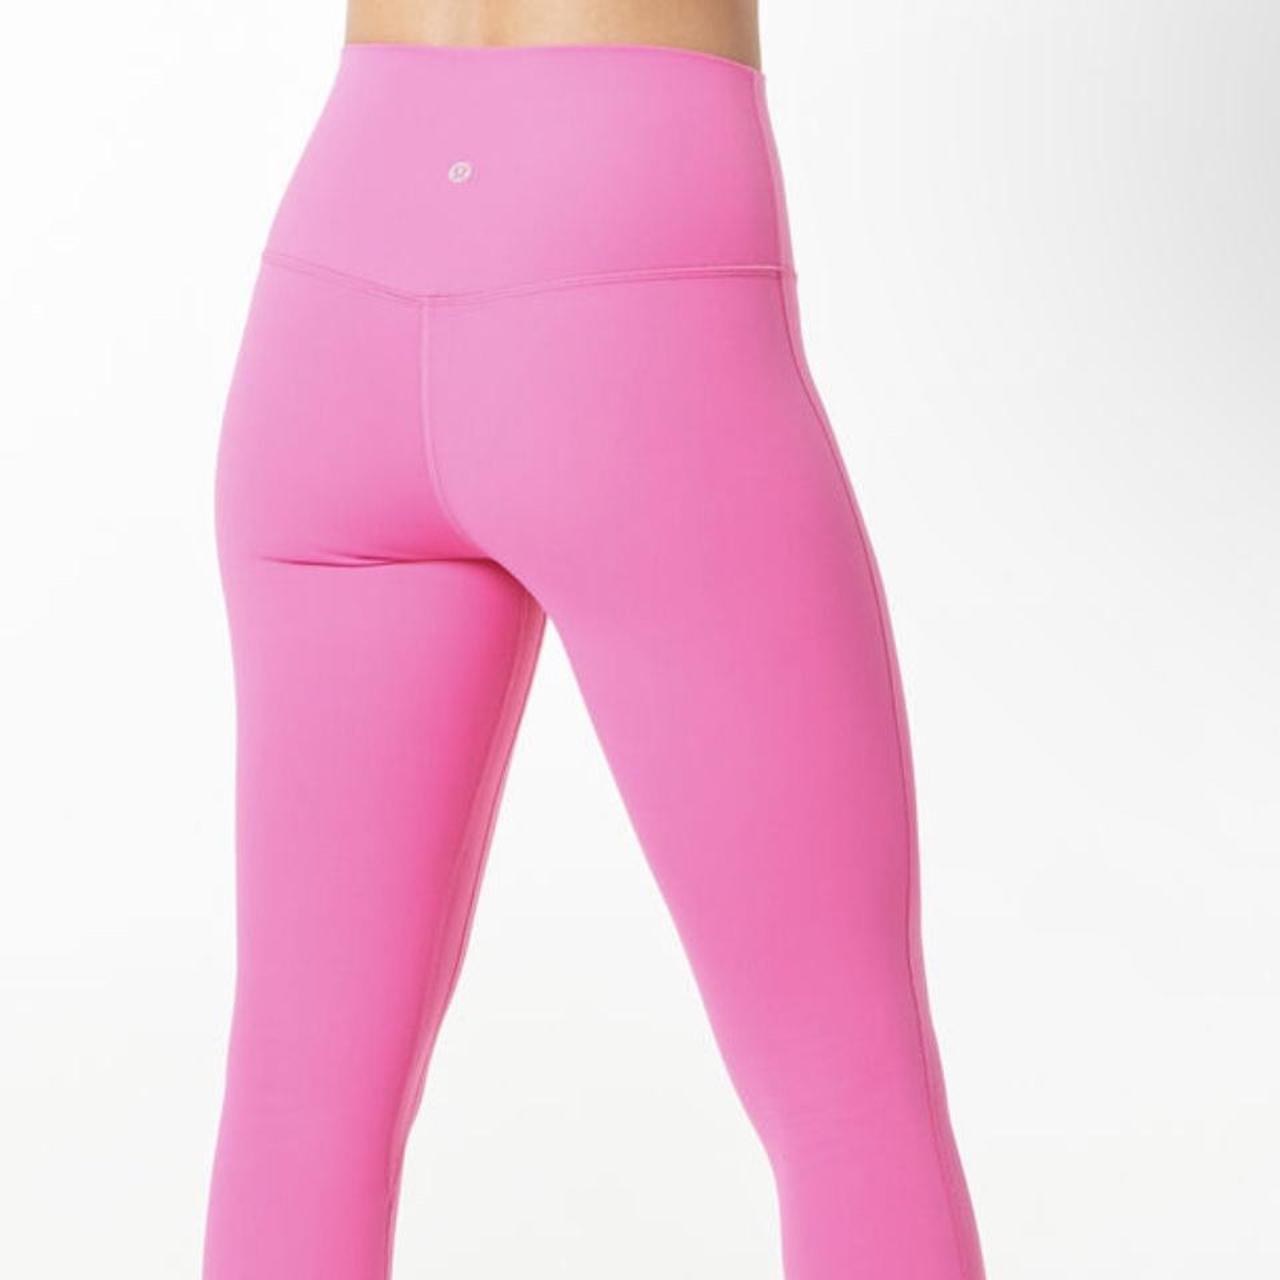 Pink Lululemon align leggings - Depop